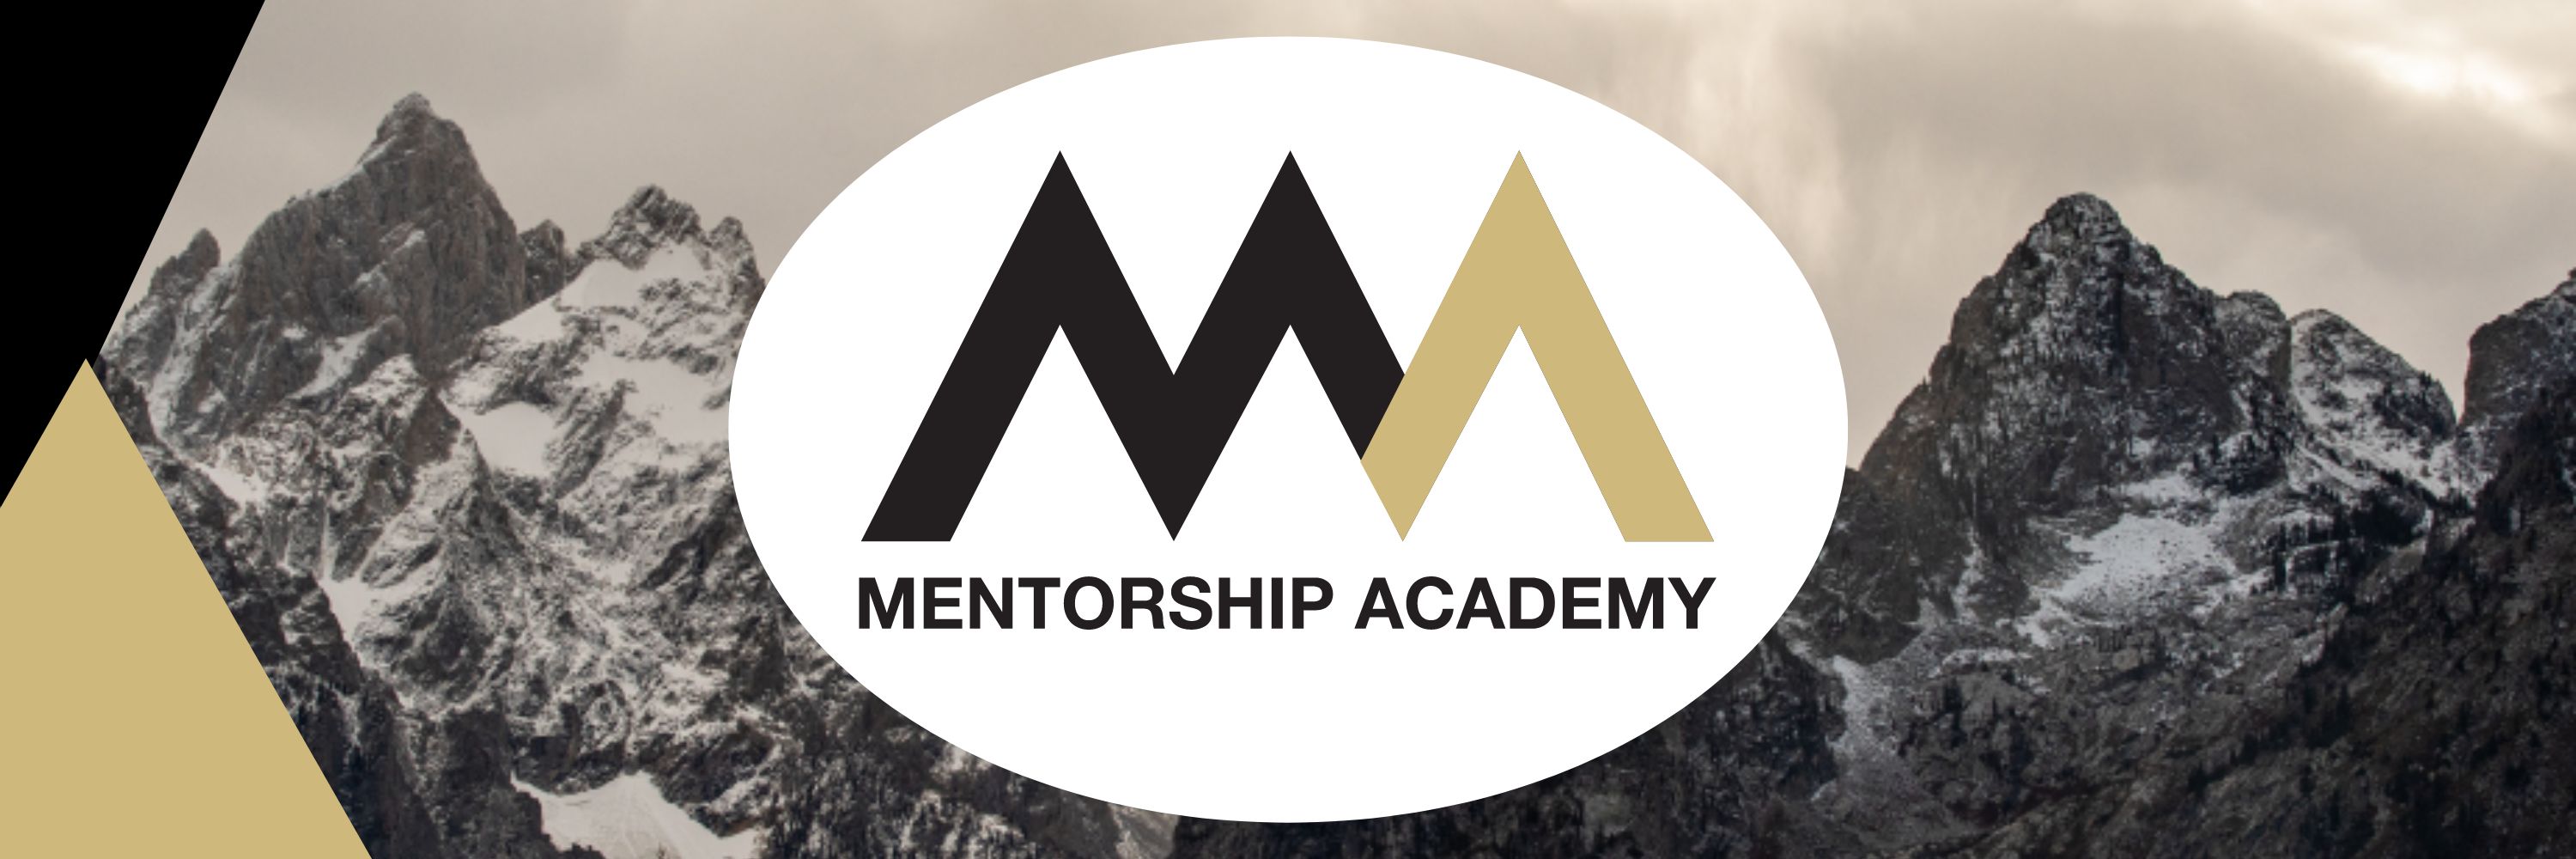 Mentorship Academy—MOVING TOGETHER: Climbing the Mentorship Mountain